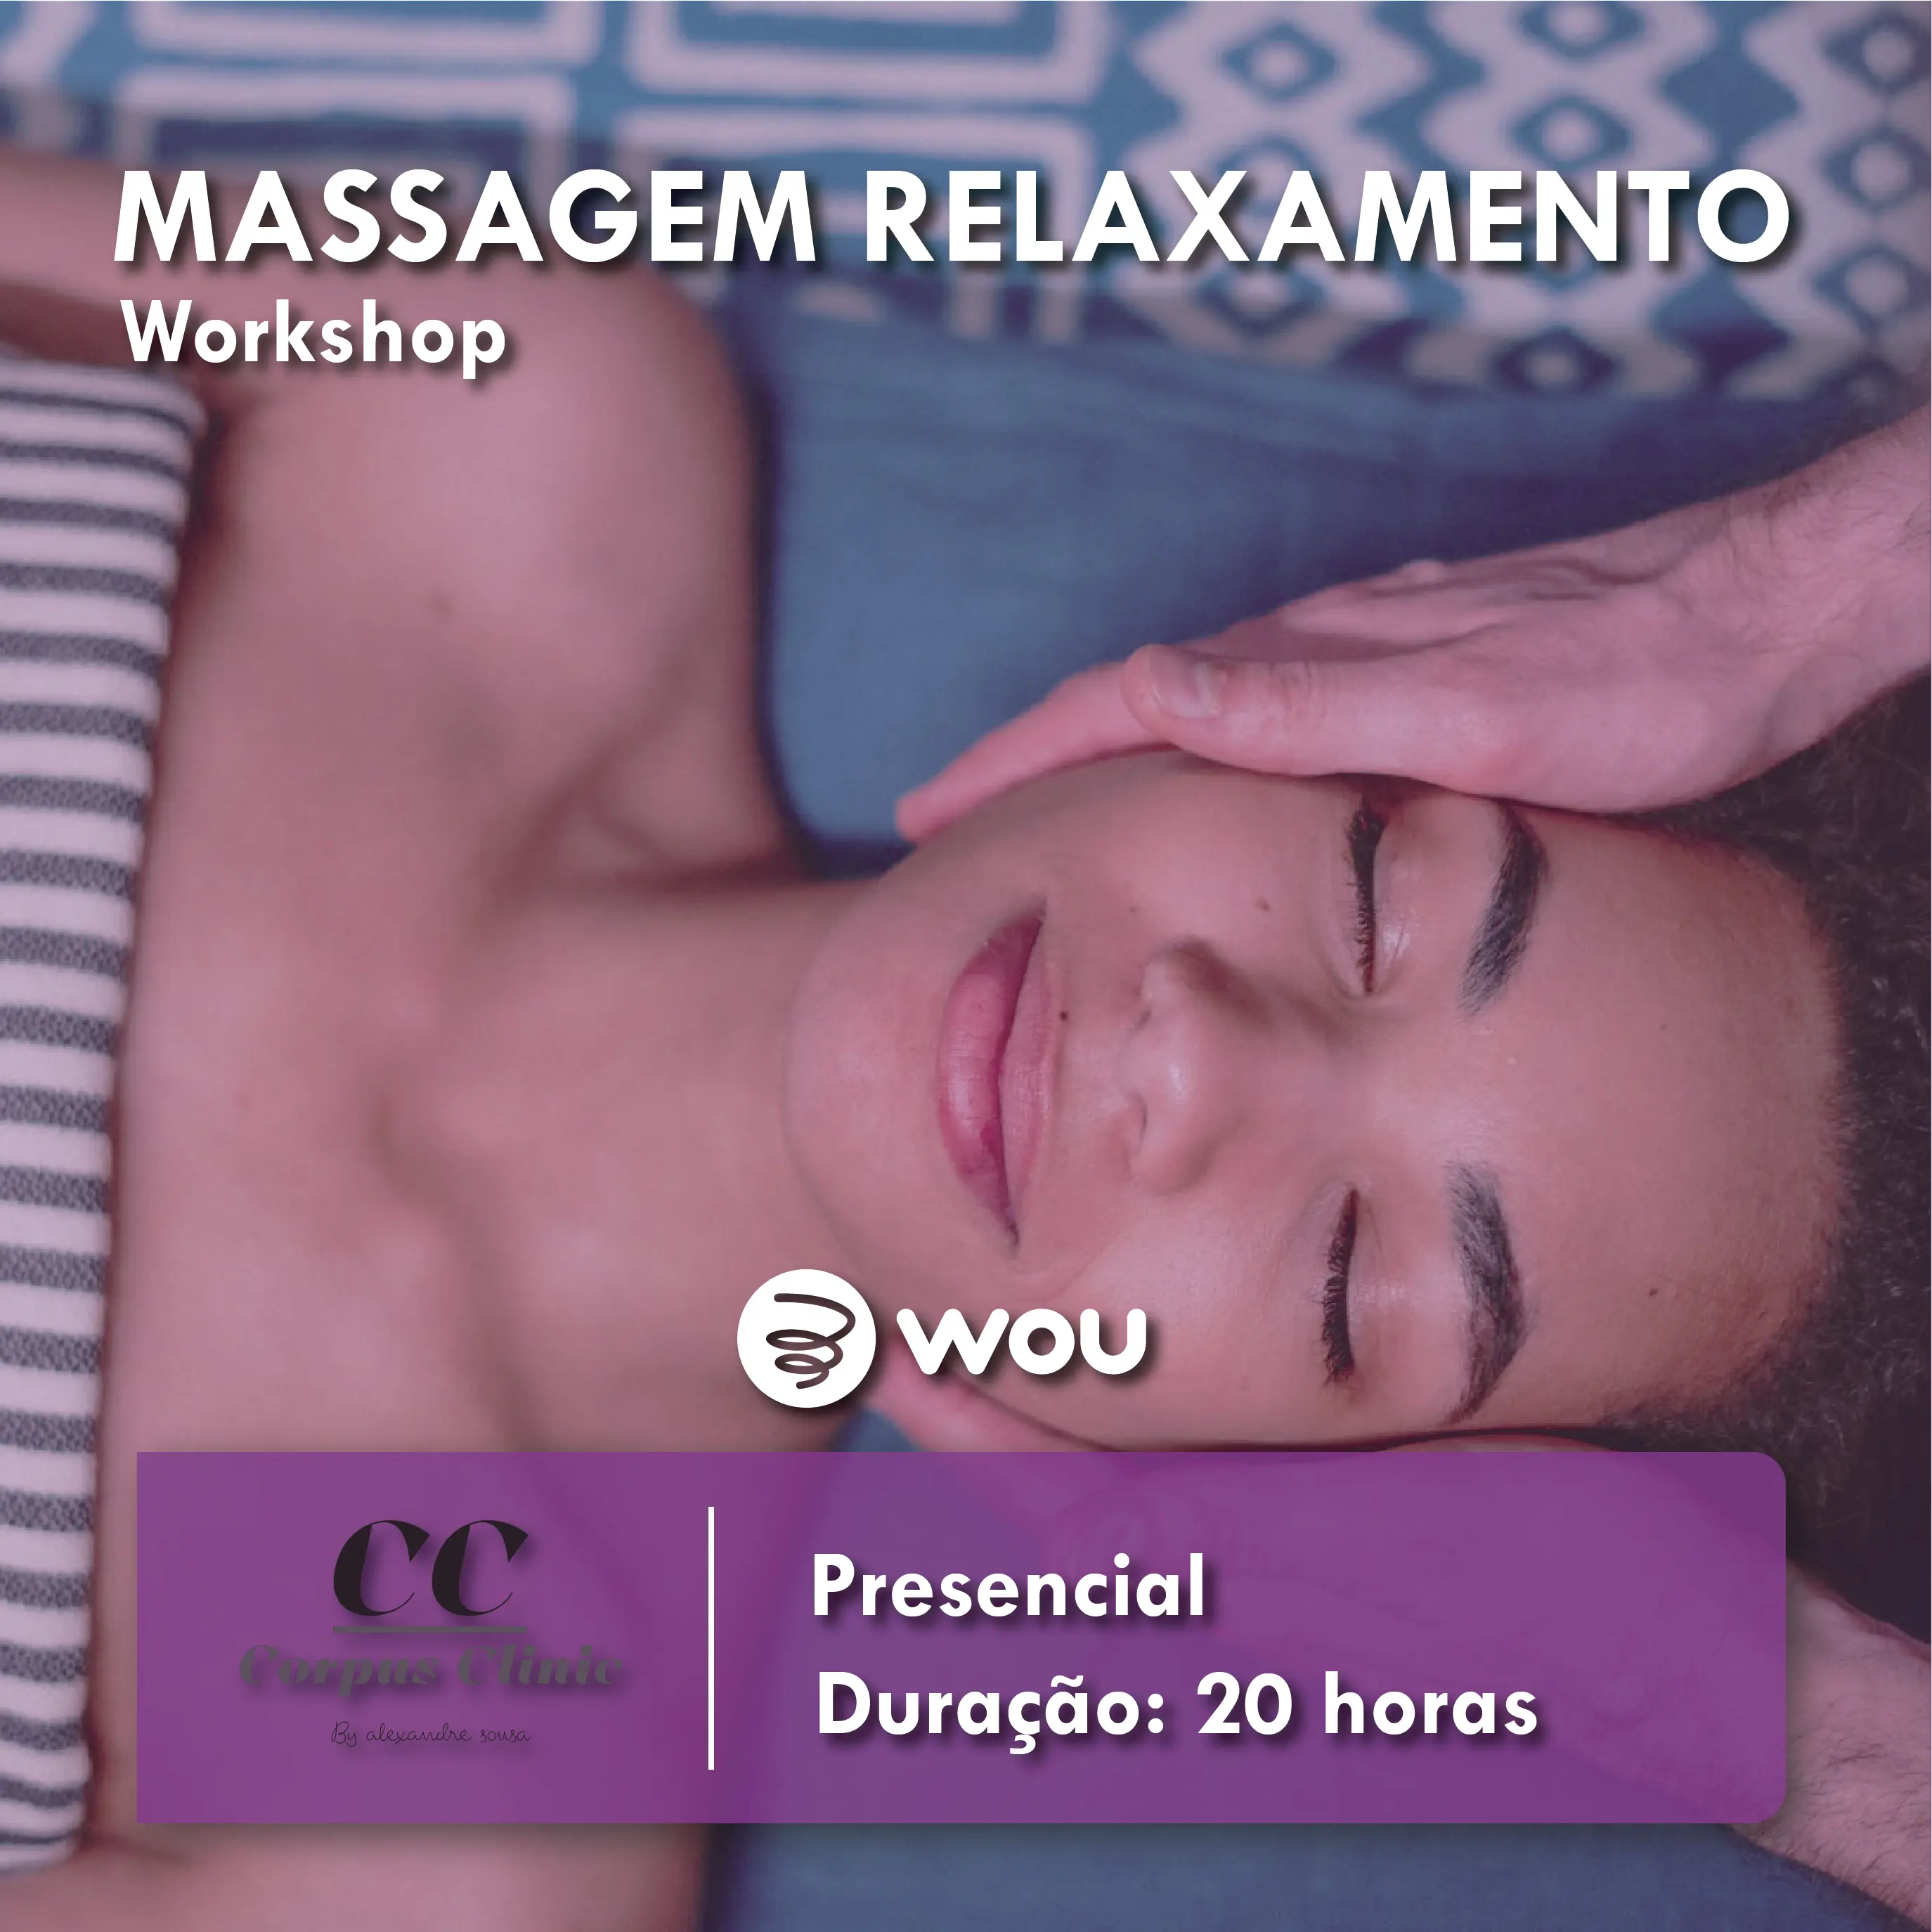 Relaxation Massage Workshop in Aveiro